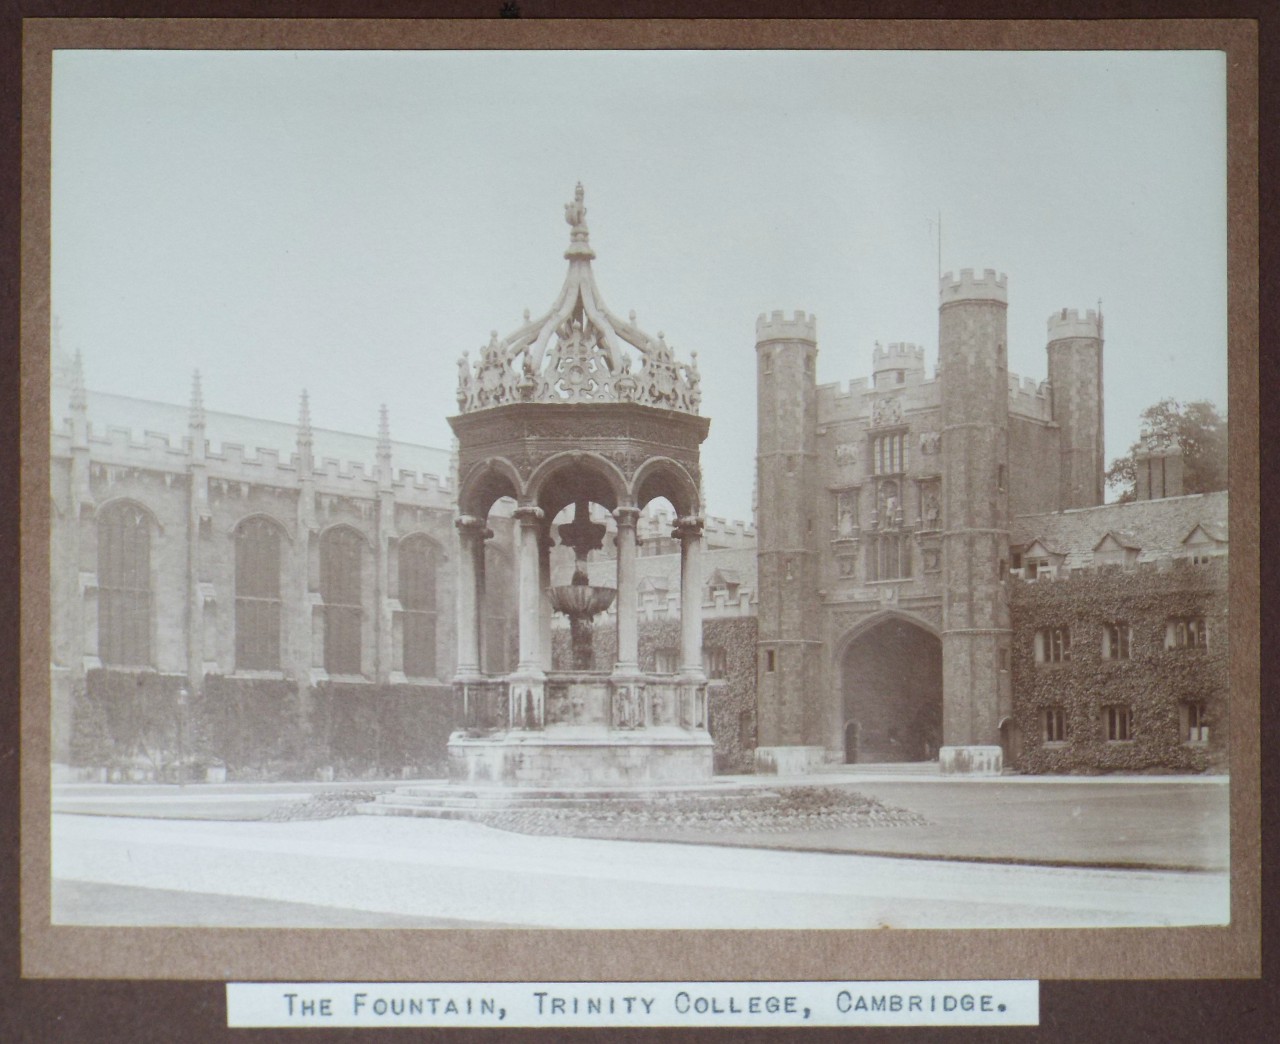 Photograph - The Fountain, Trinity College, Cambridge.